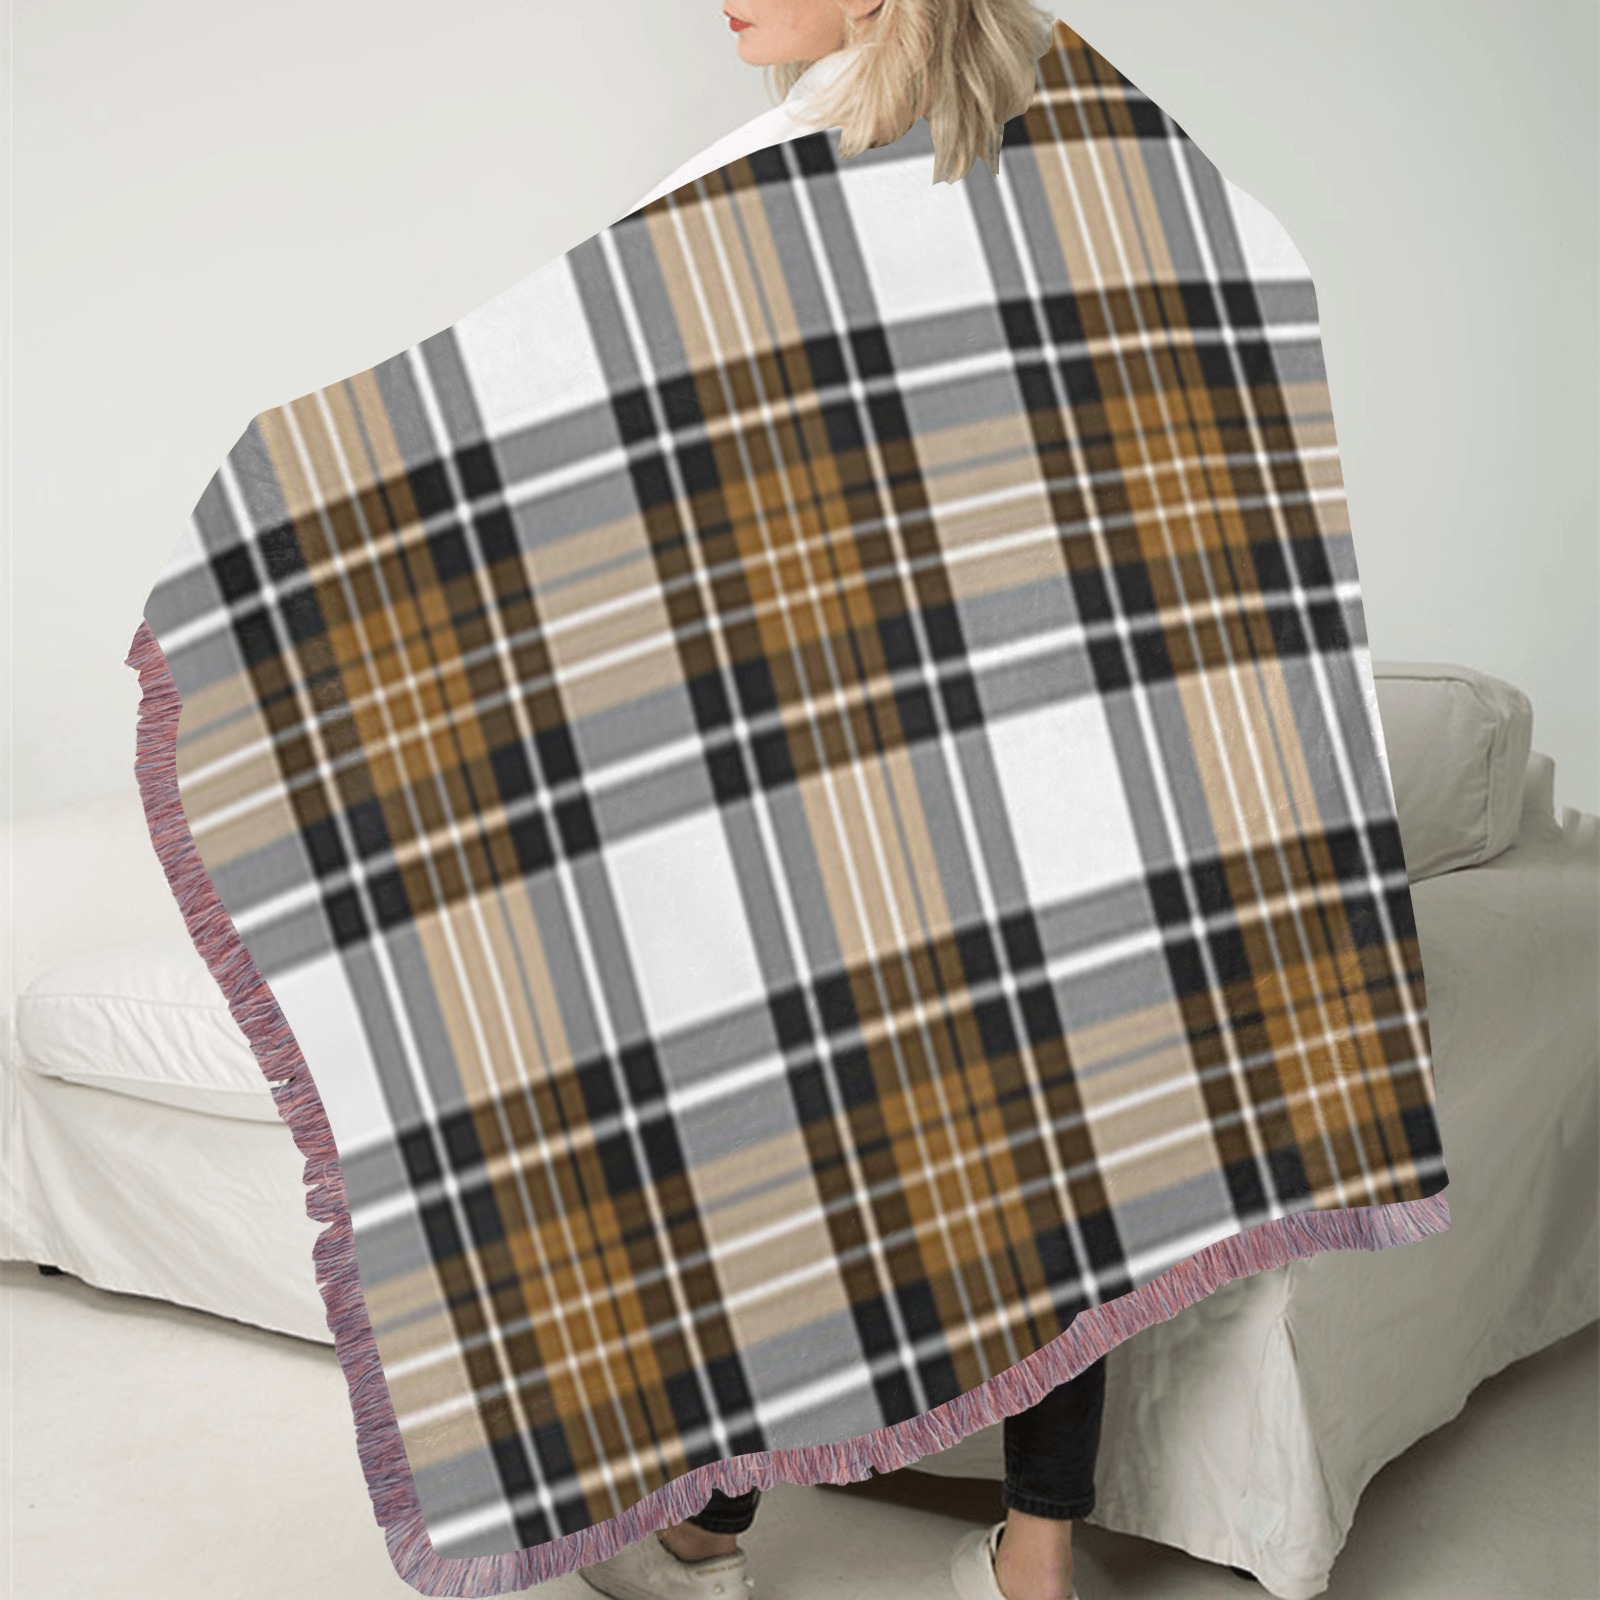 Brown Black Plaid Ultra-Soft Fringe Blanket 50"x60" (Mixed Pink)